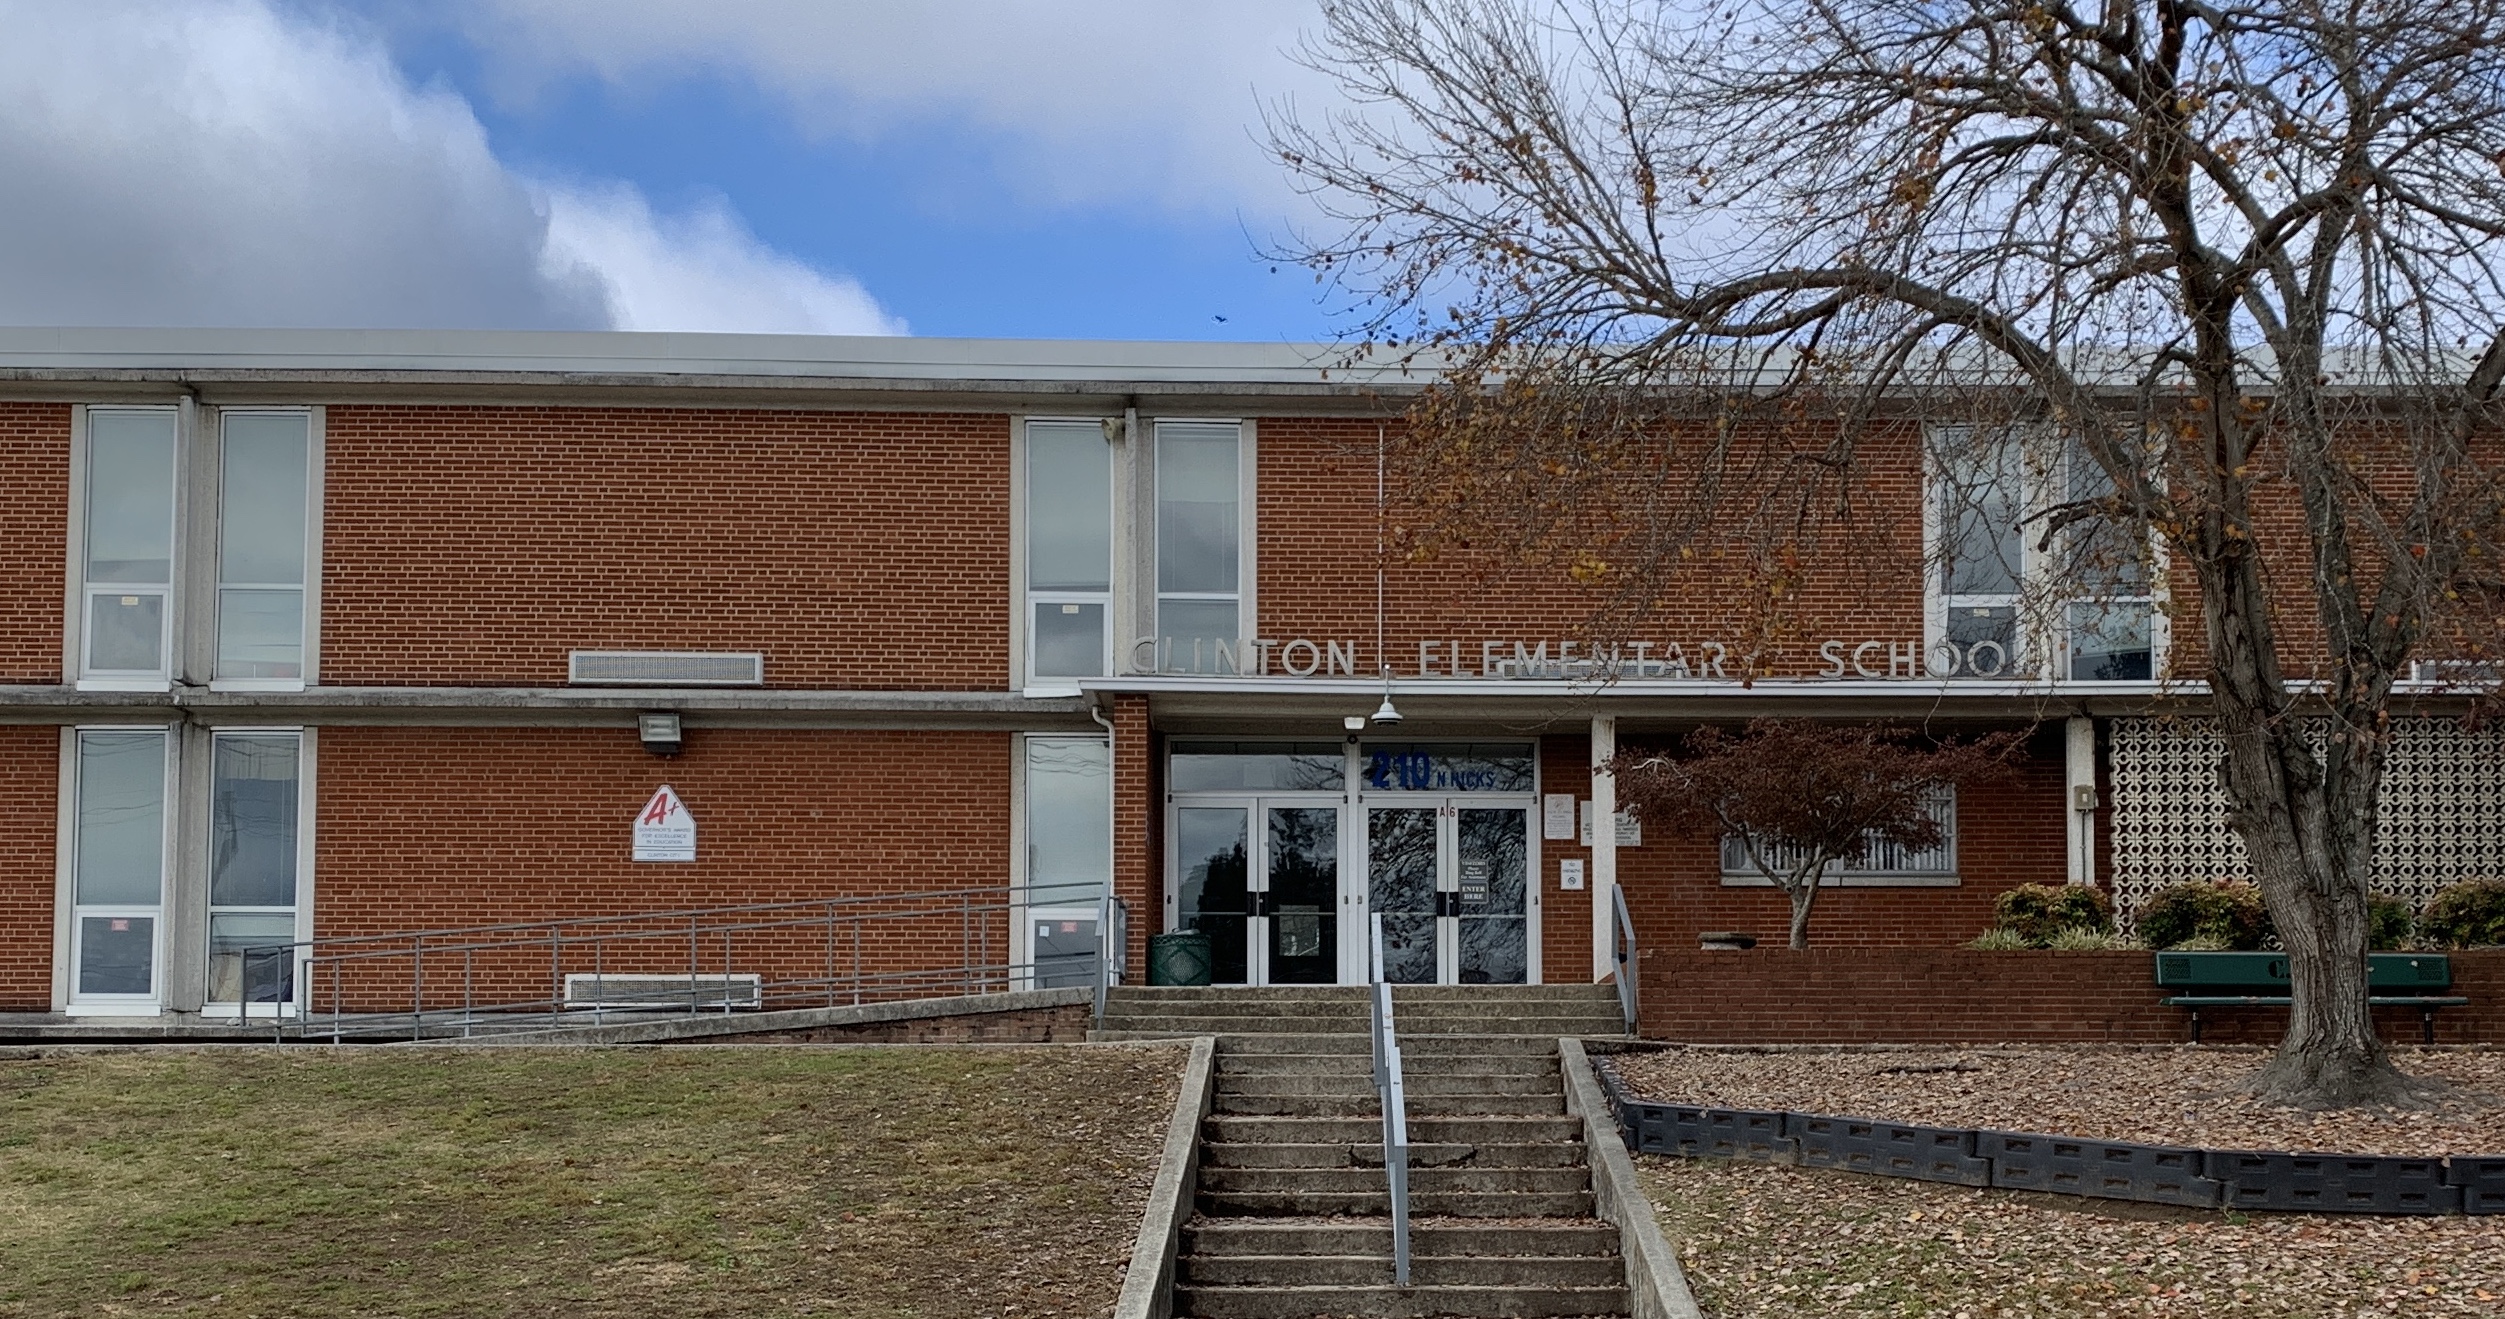 Clinton Elementary School: About The School